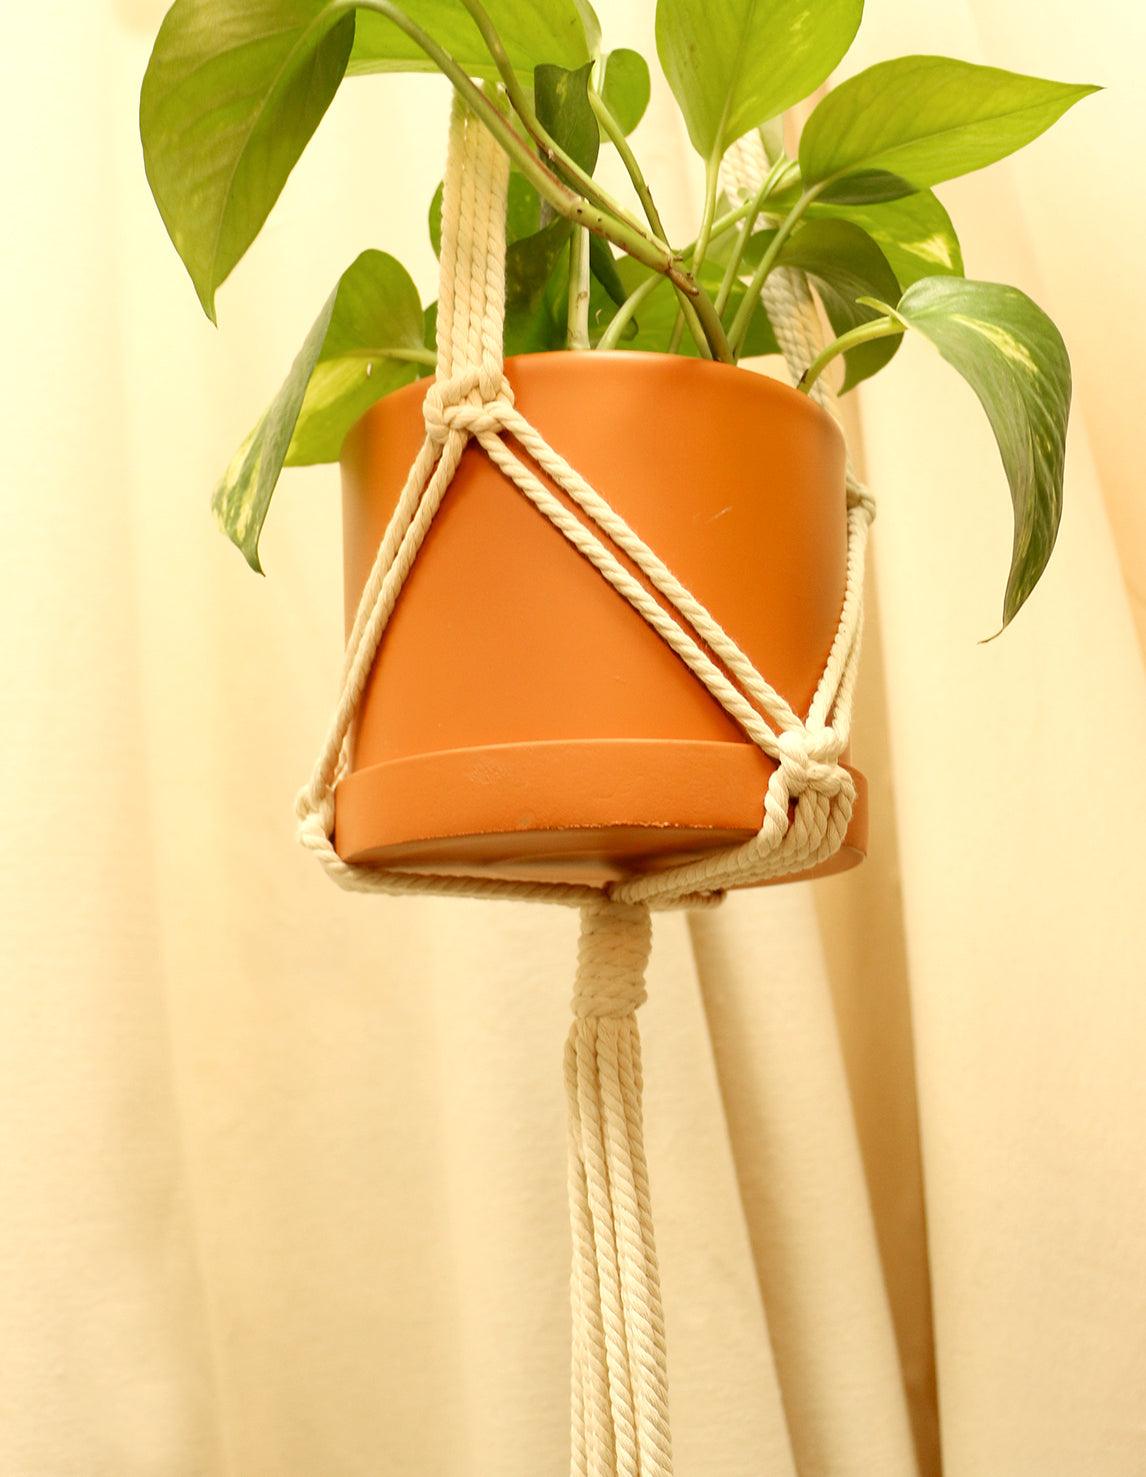 Plant Hanger - Plantquility Houseplants 